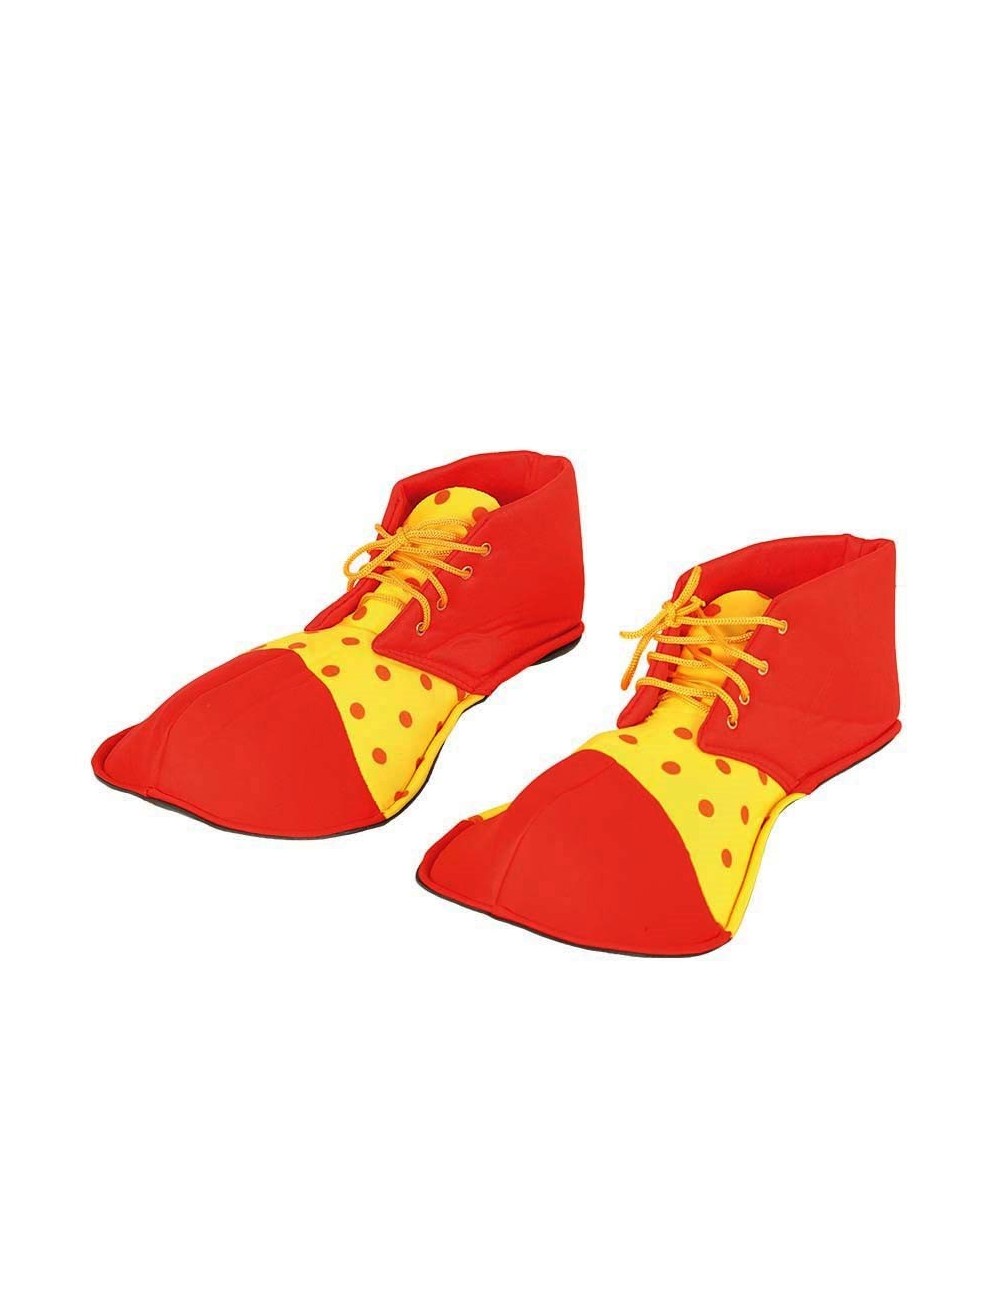 Pantofi  Clown, rosu-galben, 36 cm, adulti